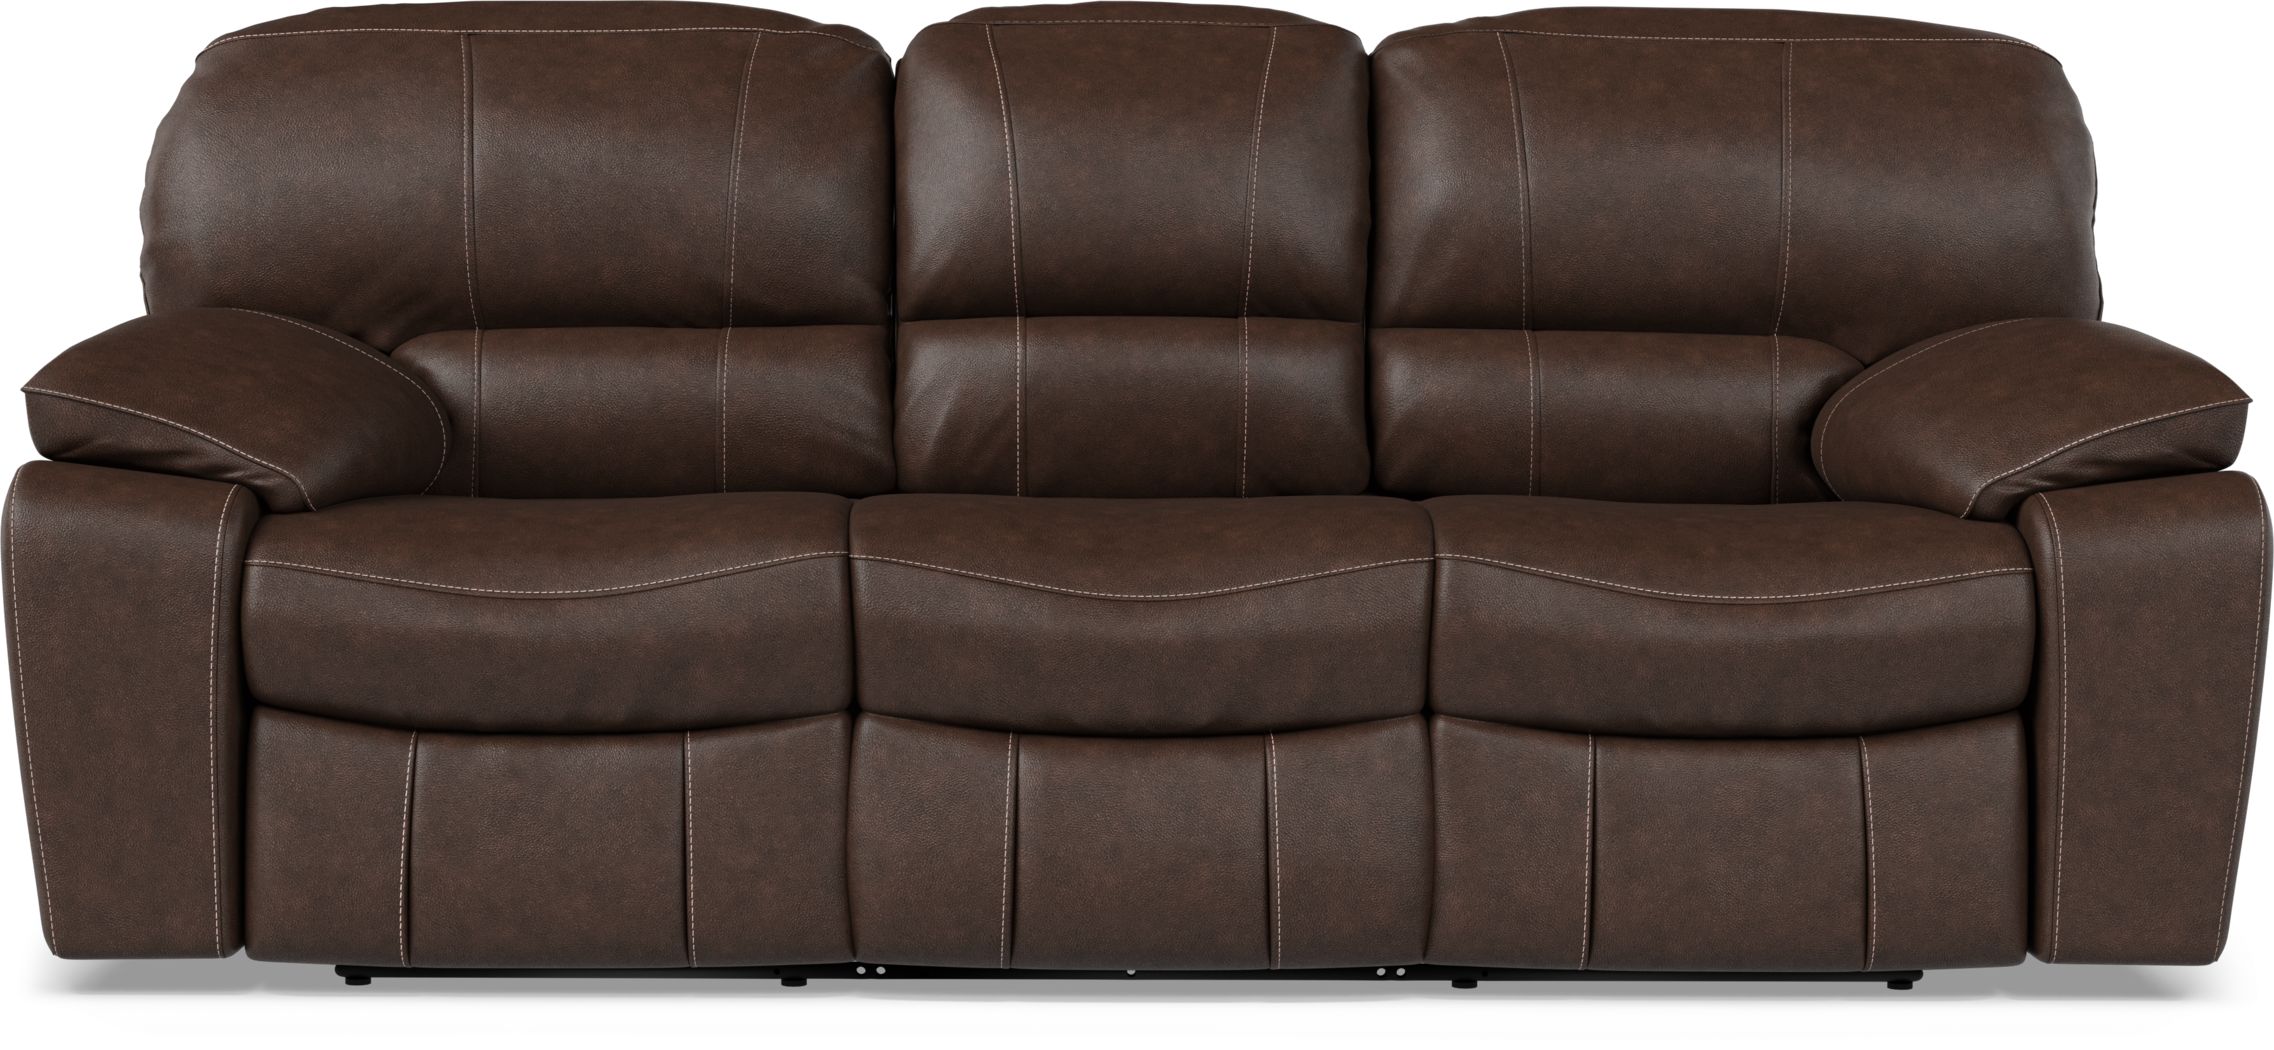 cindy crawford home furniture brown leather sofa